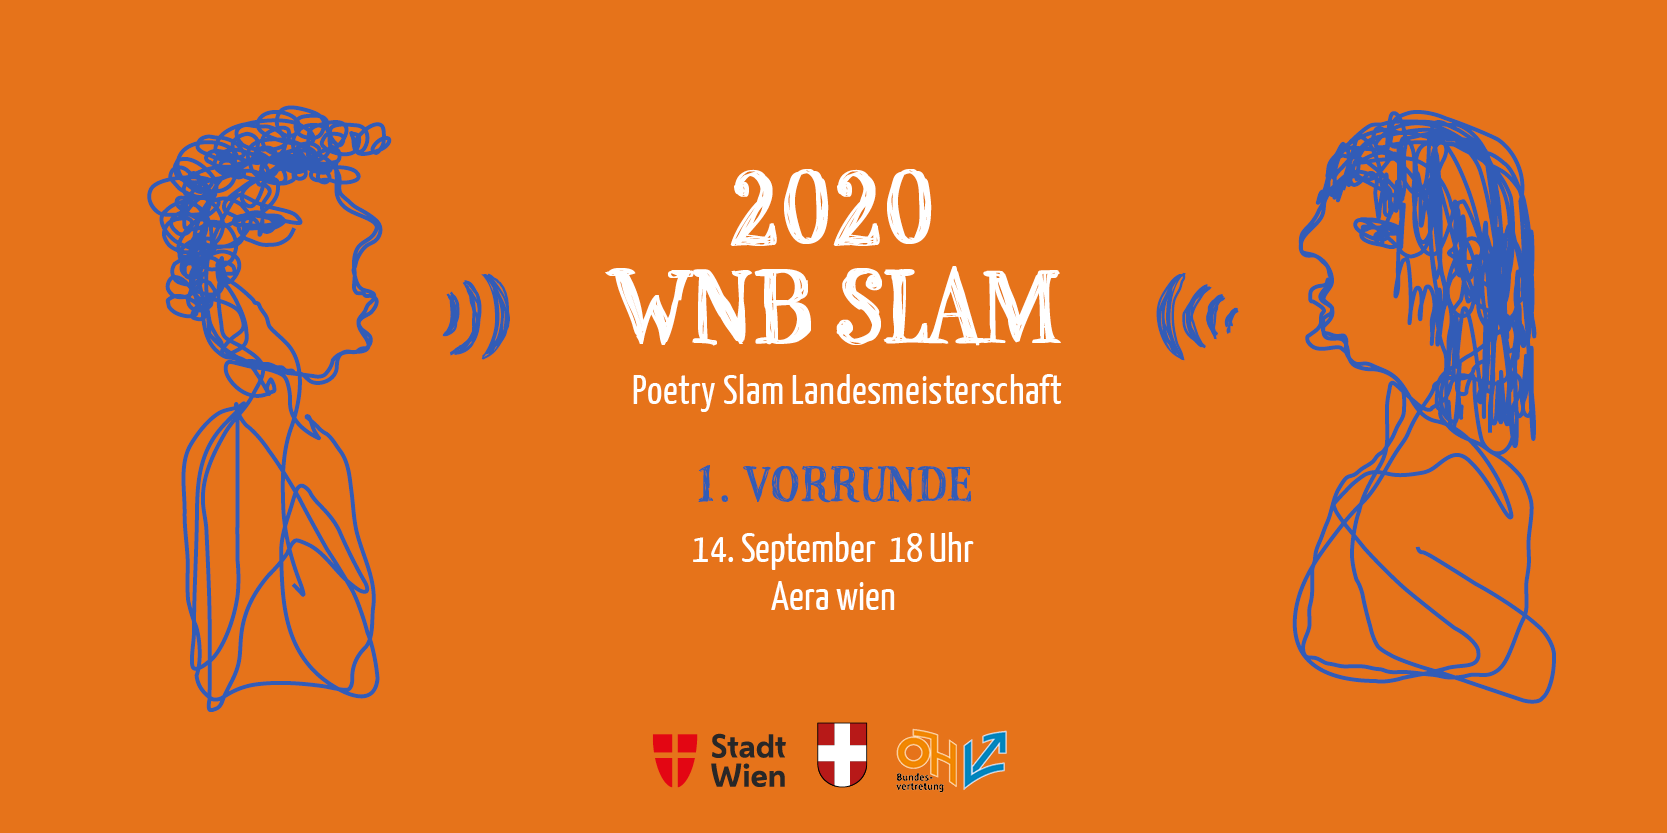 WNB SLAM 2020 Vorrunde 1 am 14. September 2020 @ Aera.